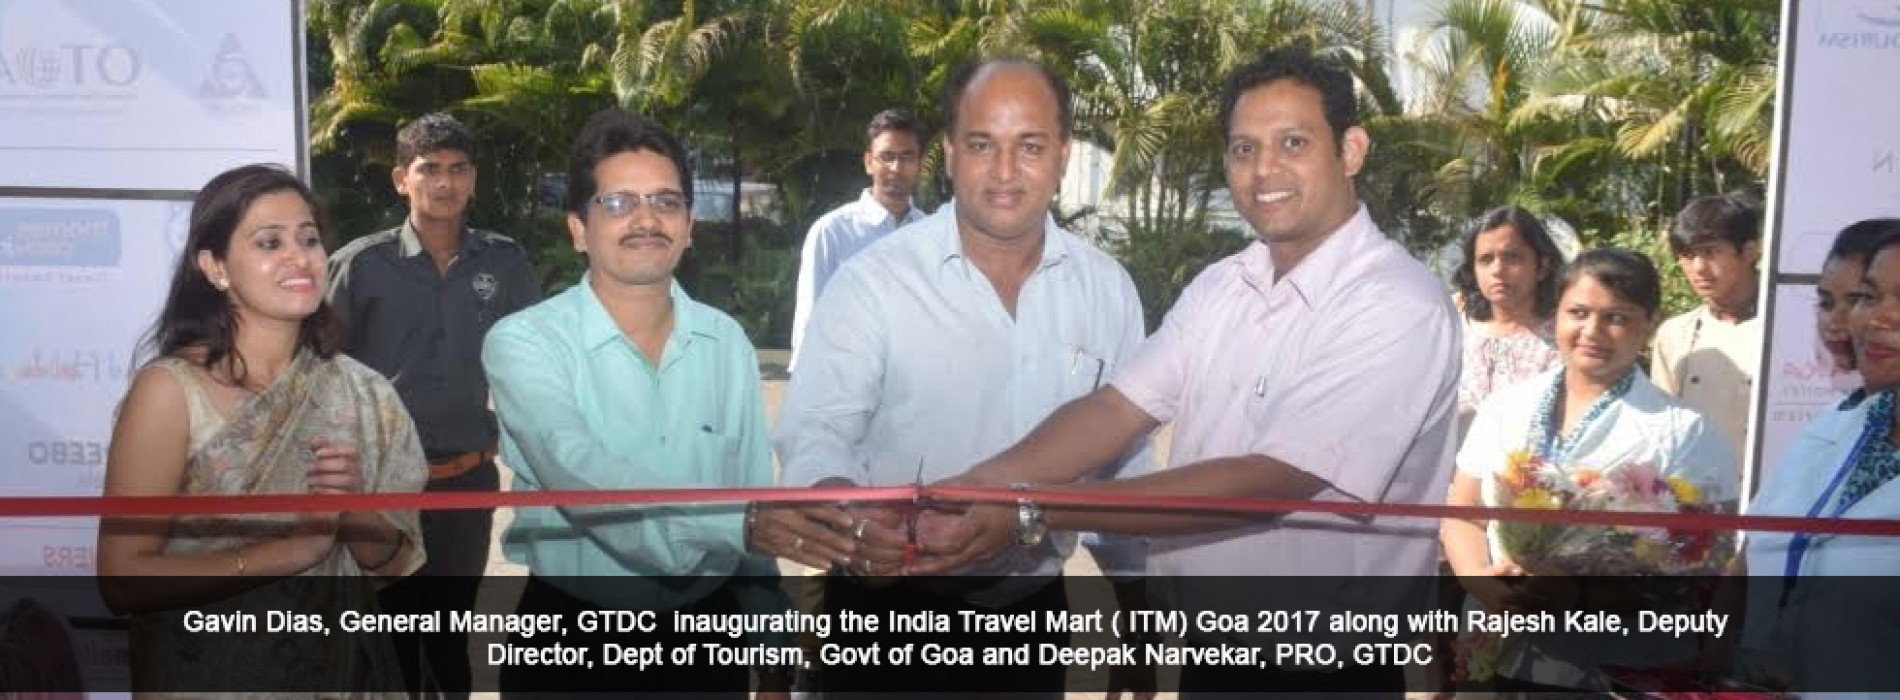 India Travel Mart (ITM) Goa 2017 inaugurated